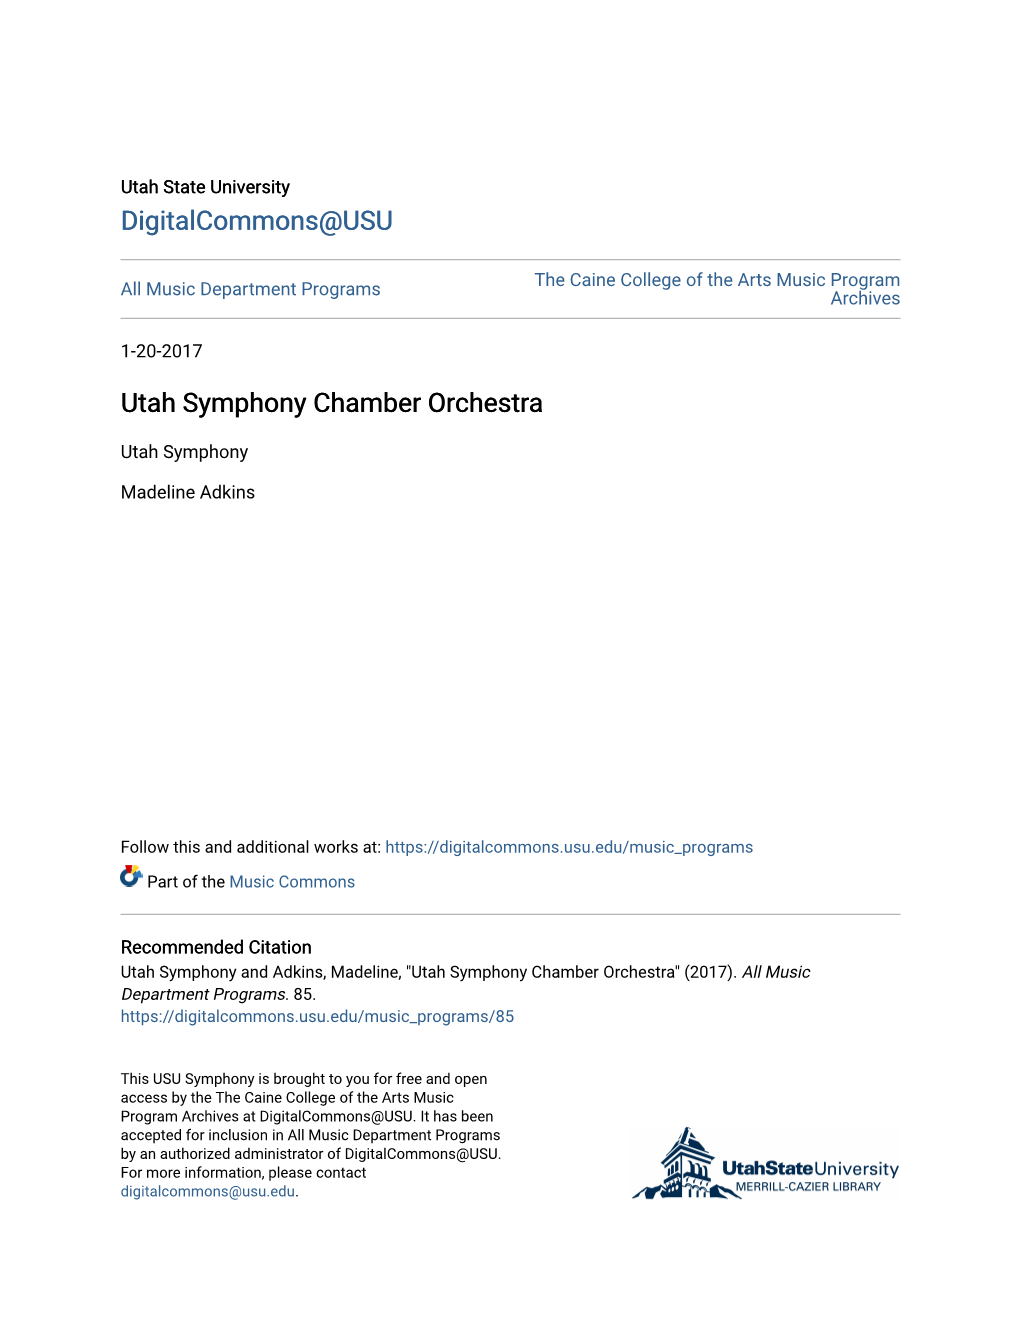 Utah Symphony Chamber Orchestra